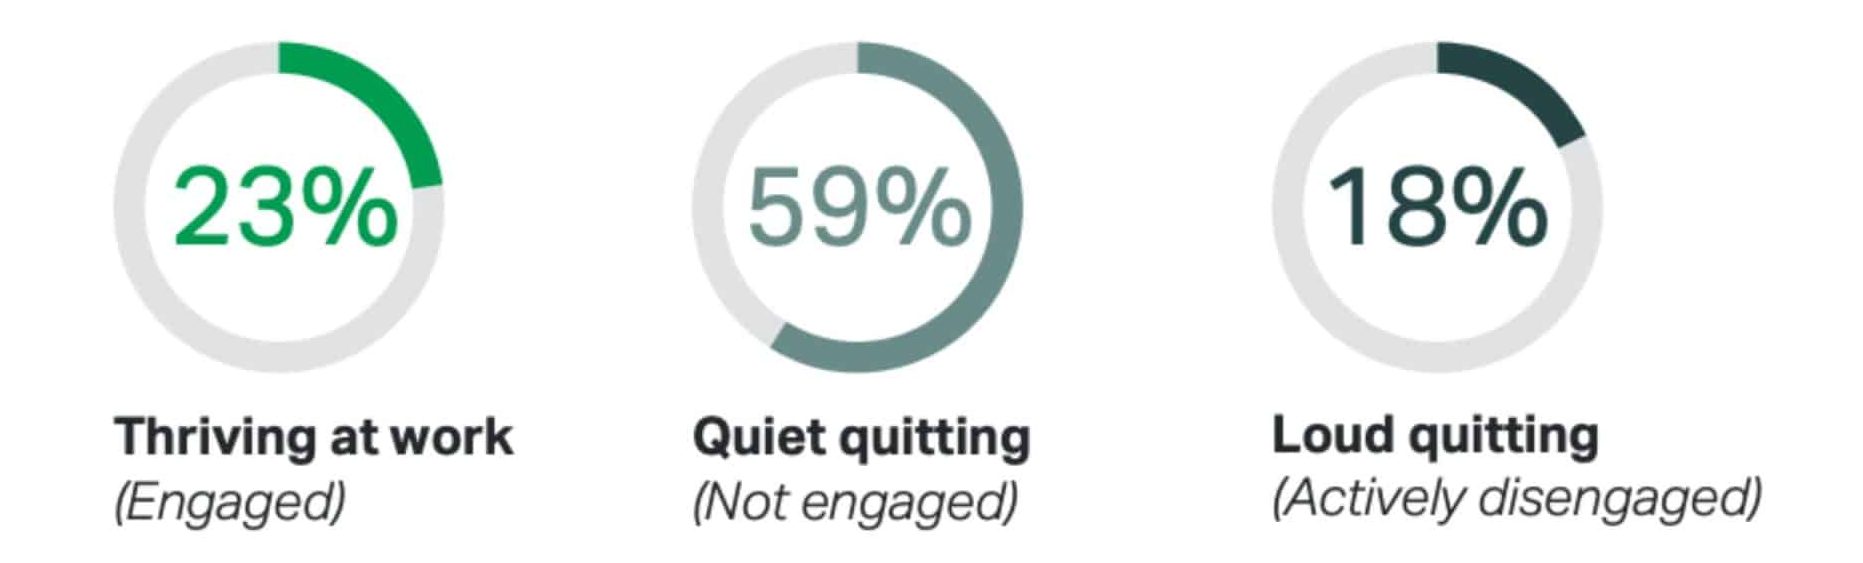 Loud quitting - illustration étude Gallup